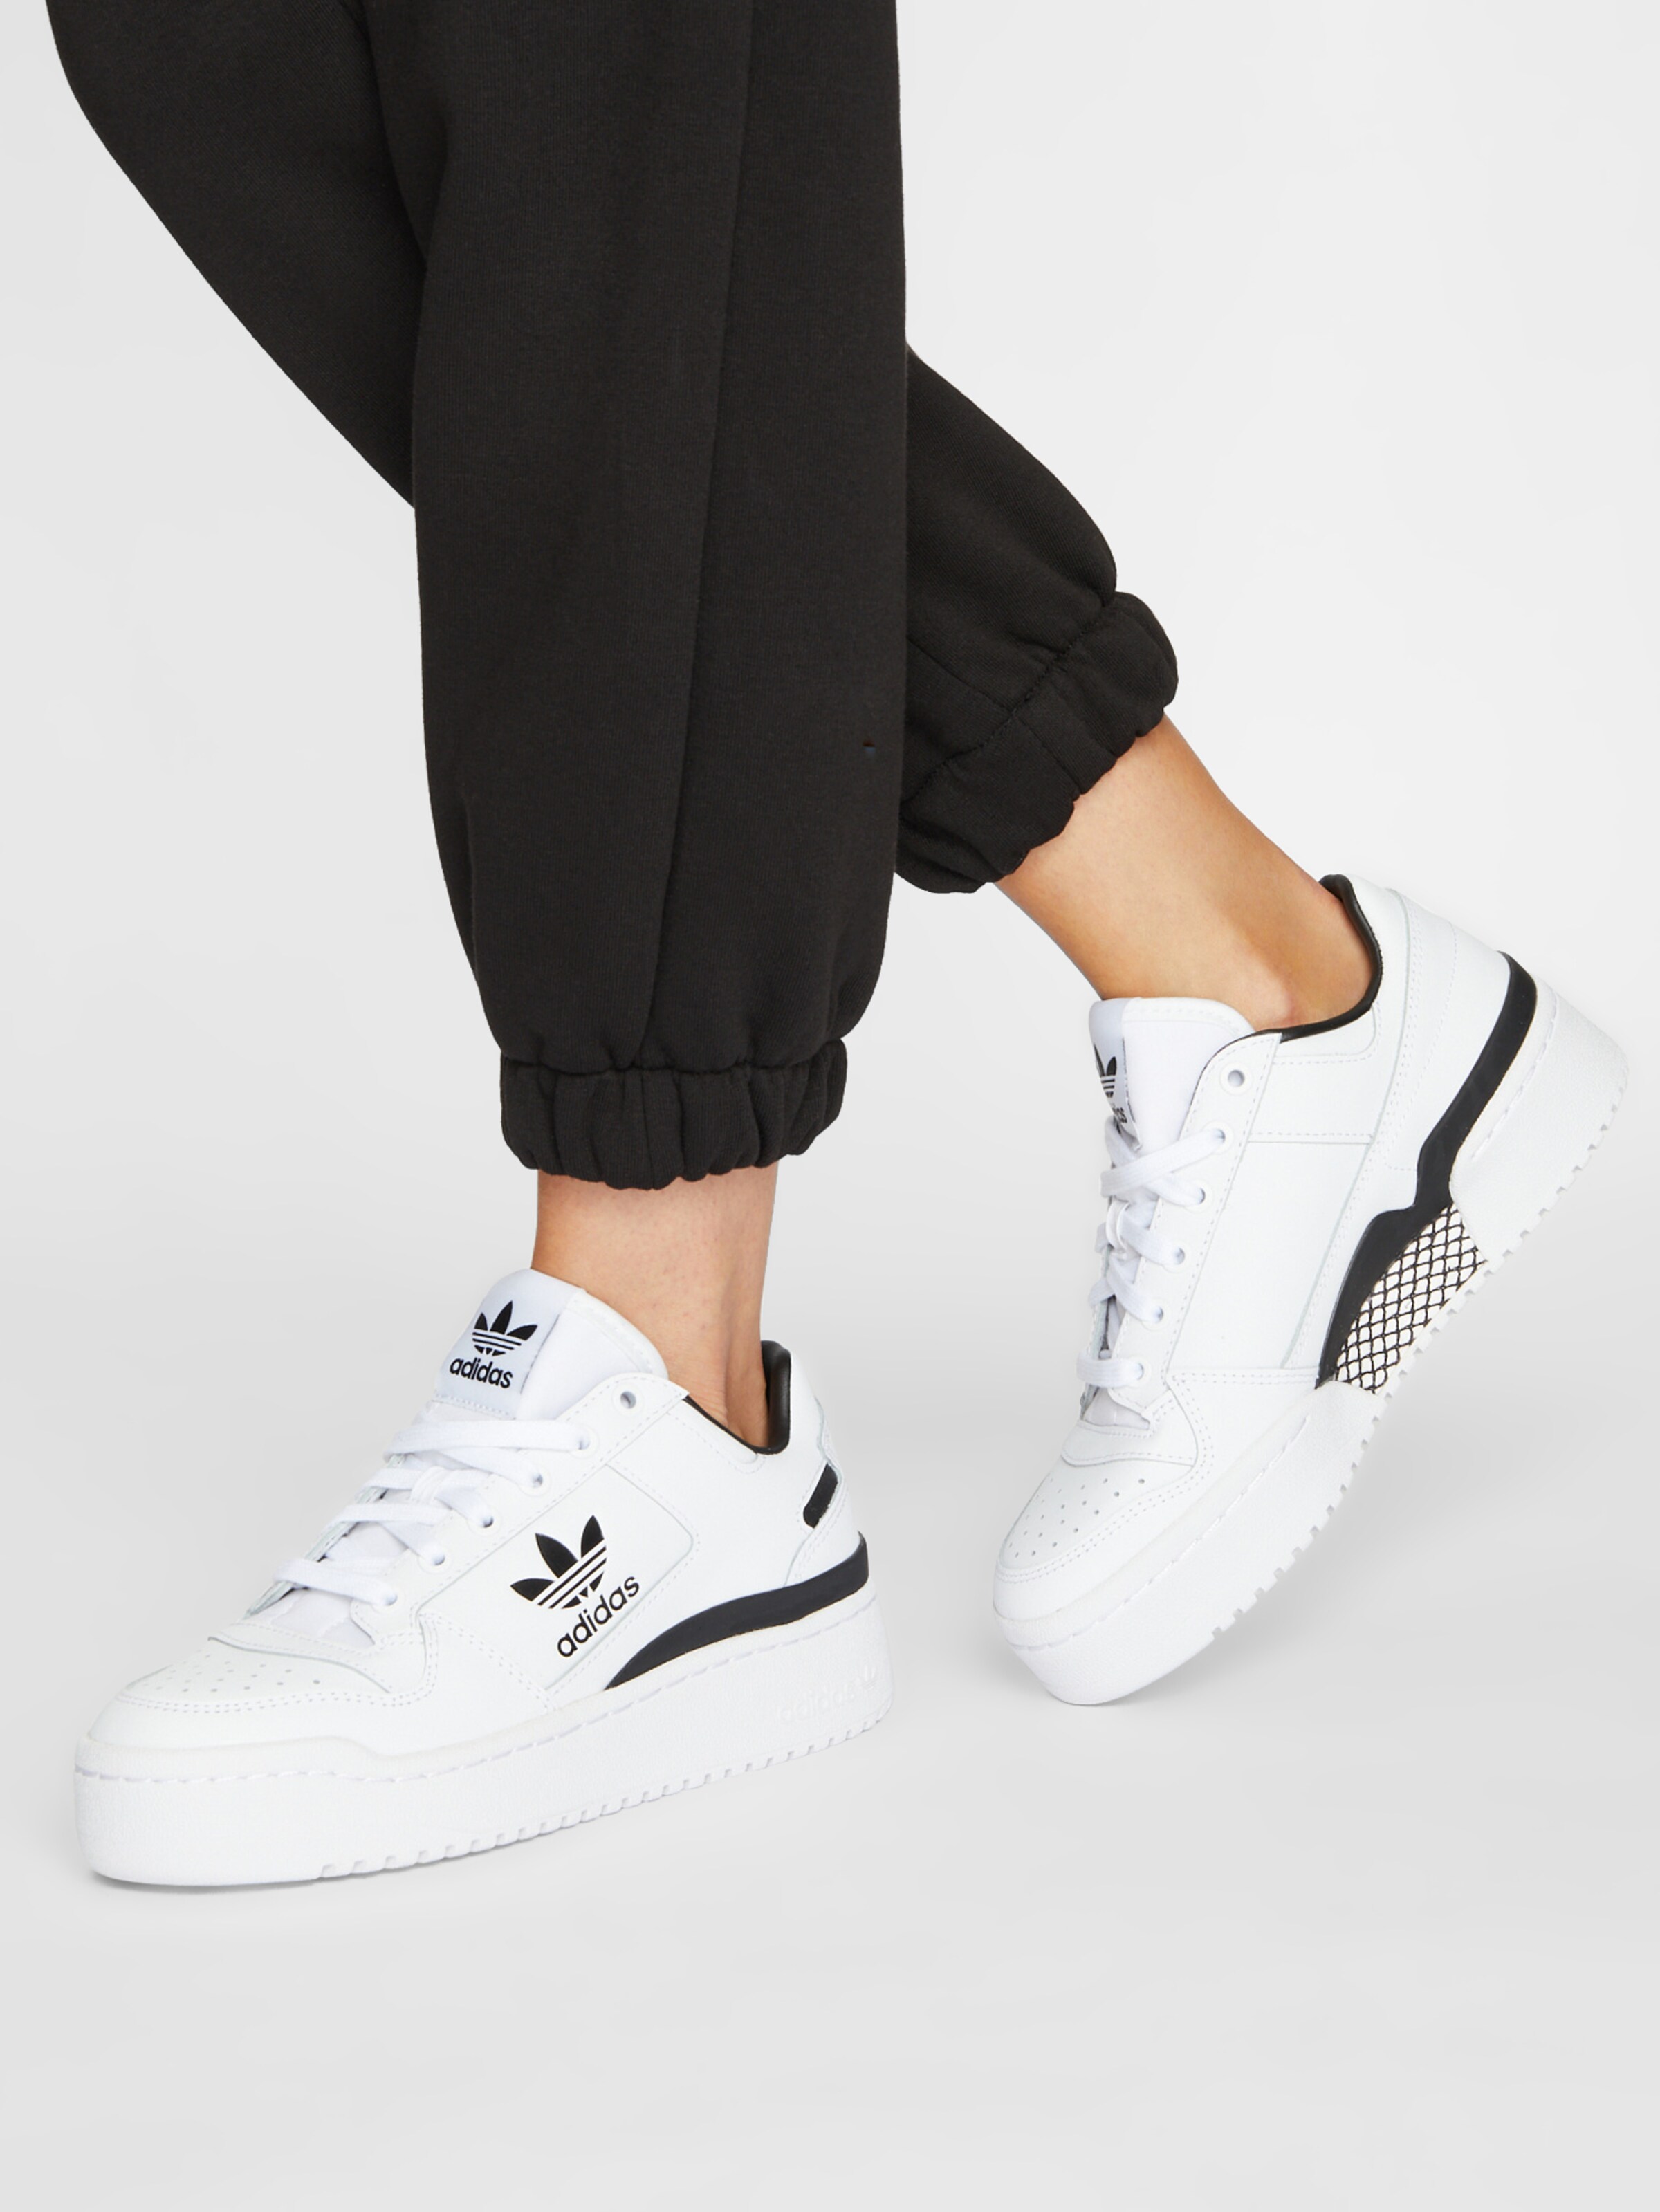 Buy adidas Originals Men's Pro Model Sneaker at Amazon.in